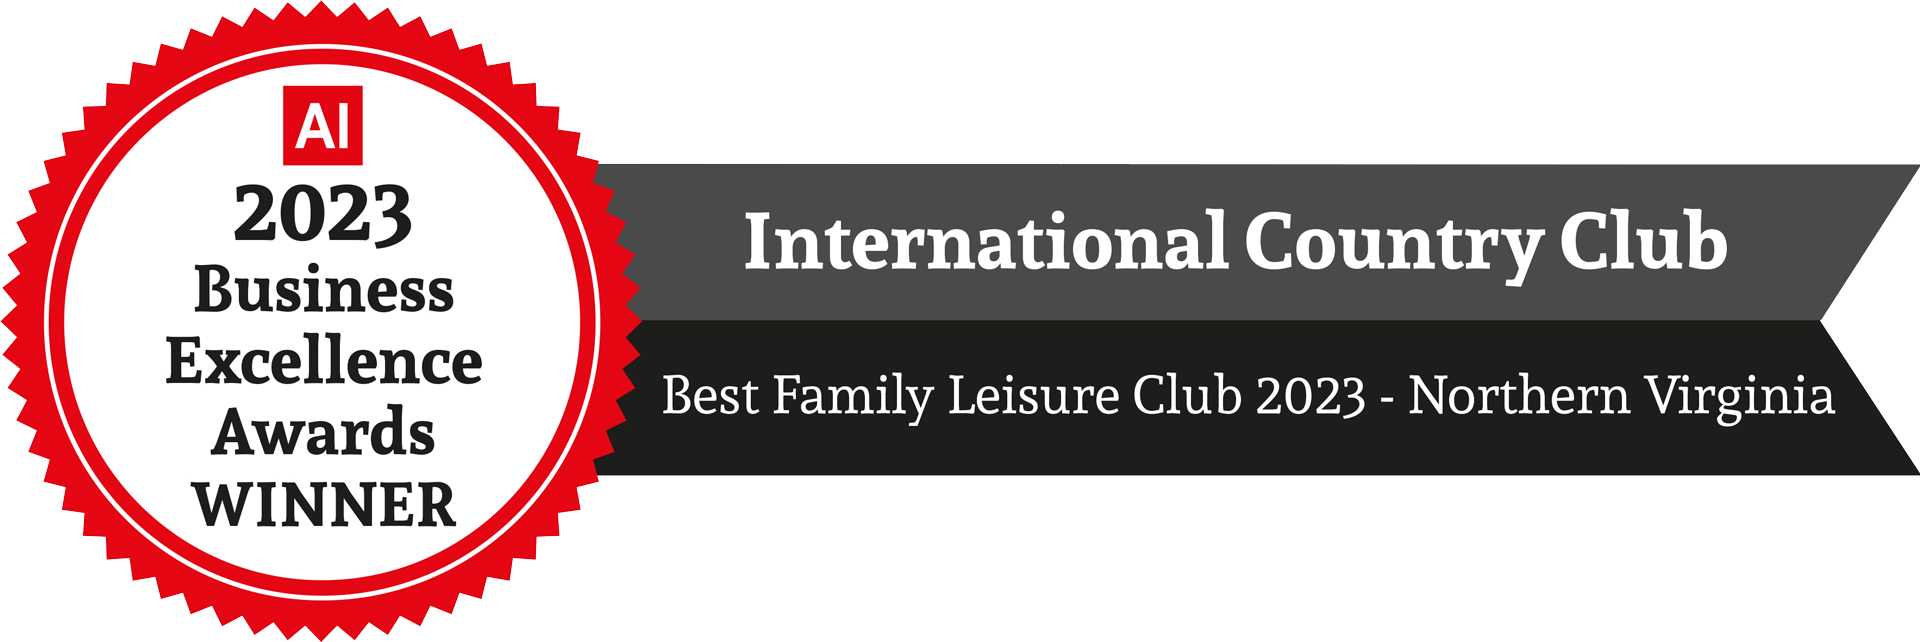 International Country Club Award